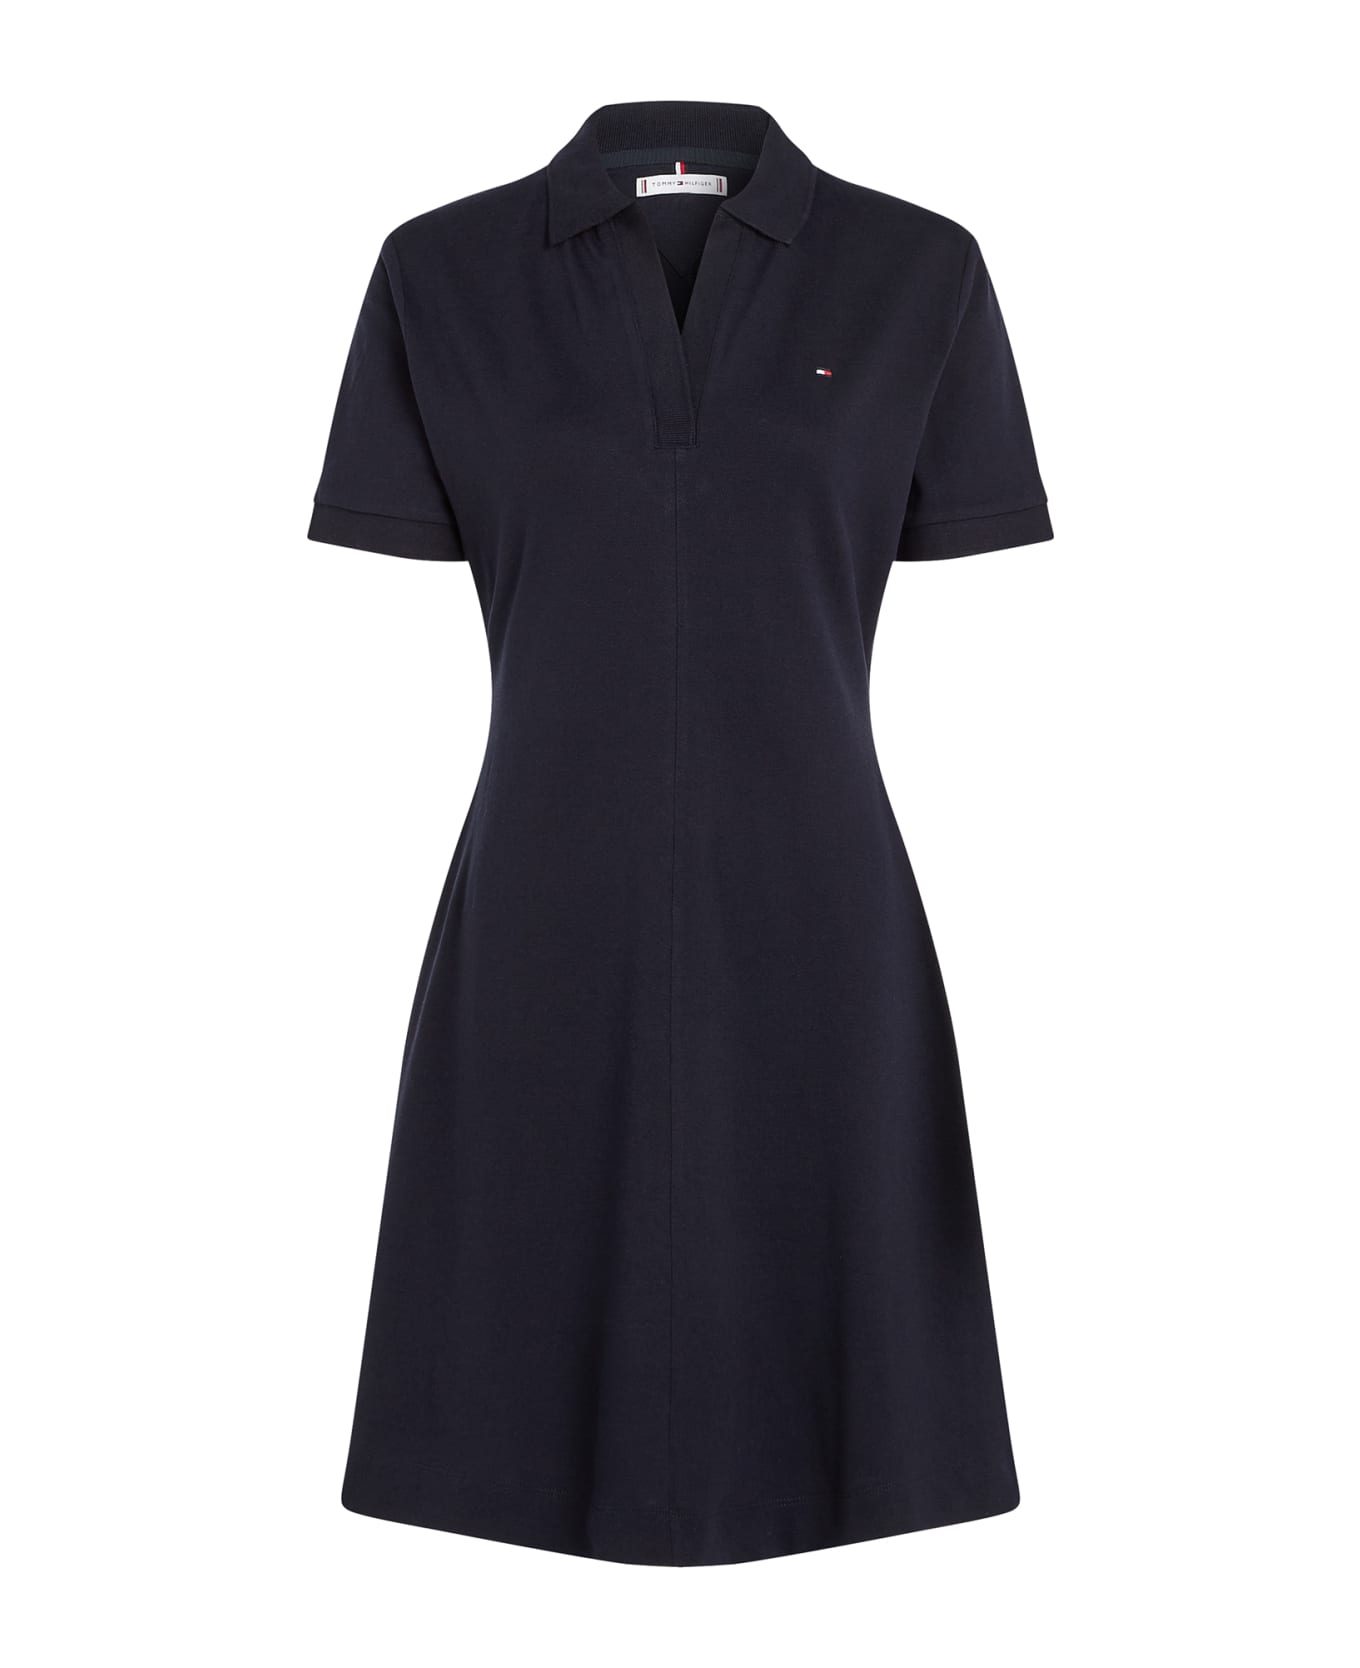 Tommy Hilfiger Navy Blue Polo Dress Without Buttons - DESERT SKY